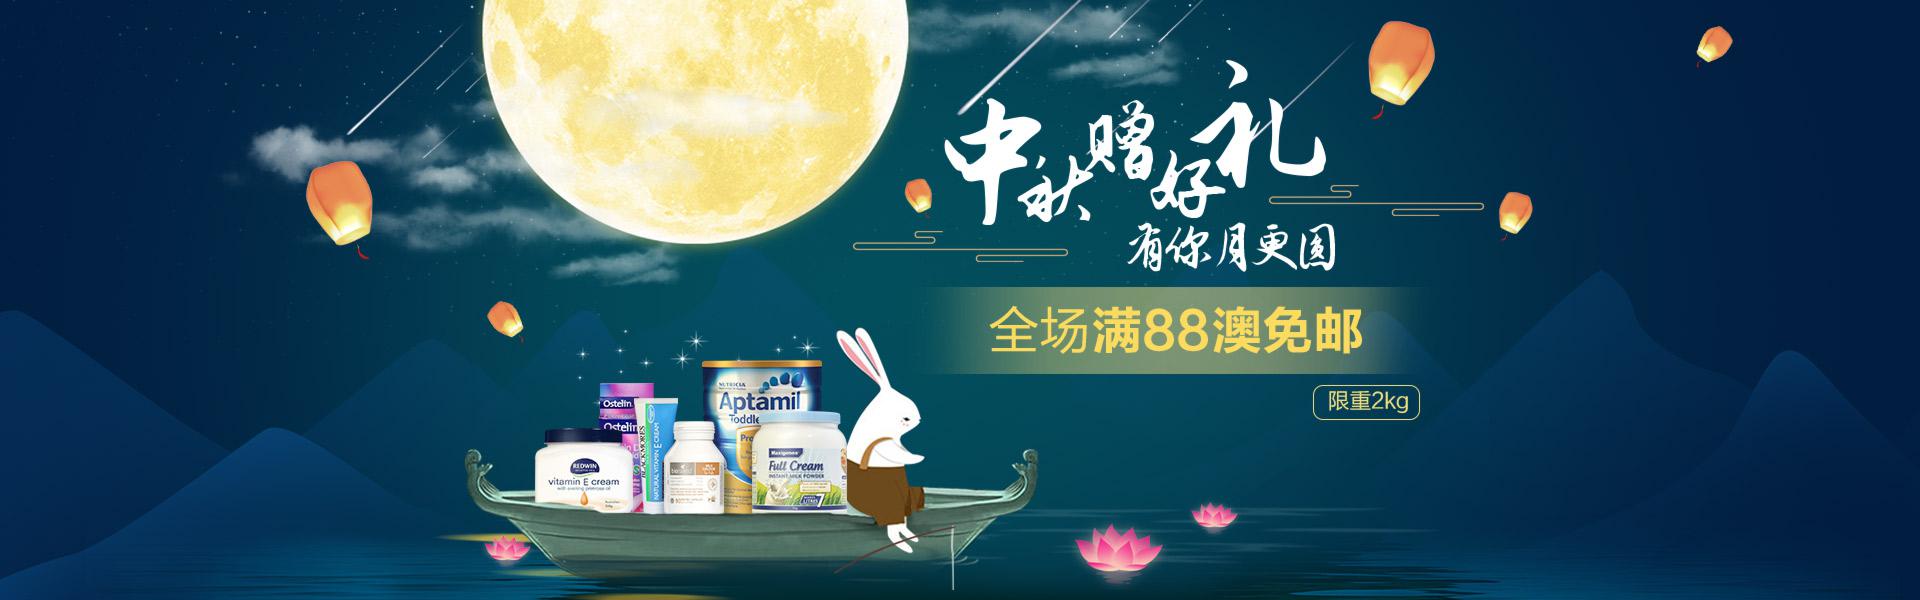 Pharmacy 4 Less中文官网 精选保健个护专场 中秋促销